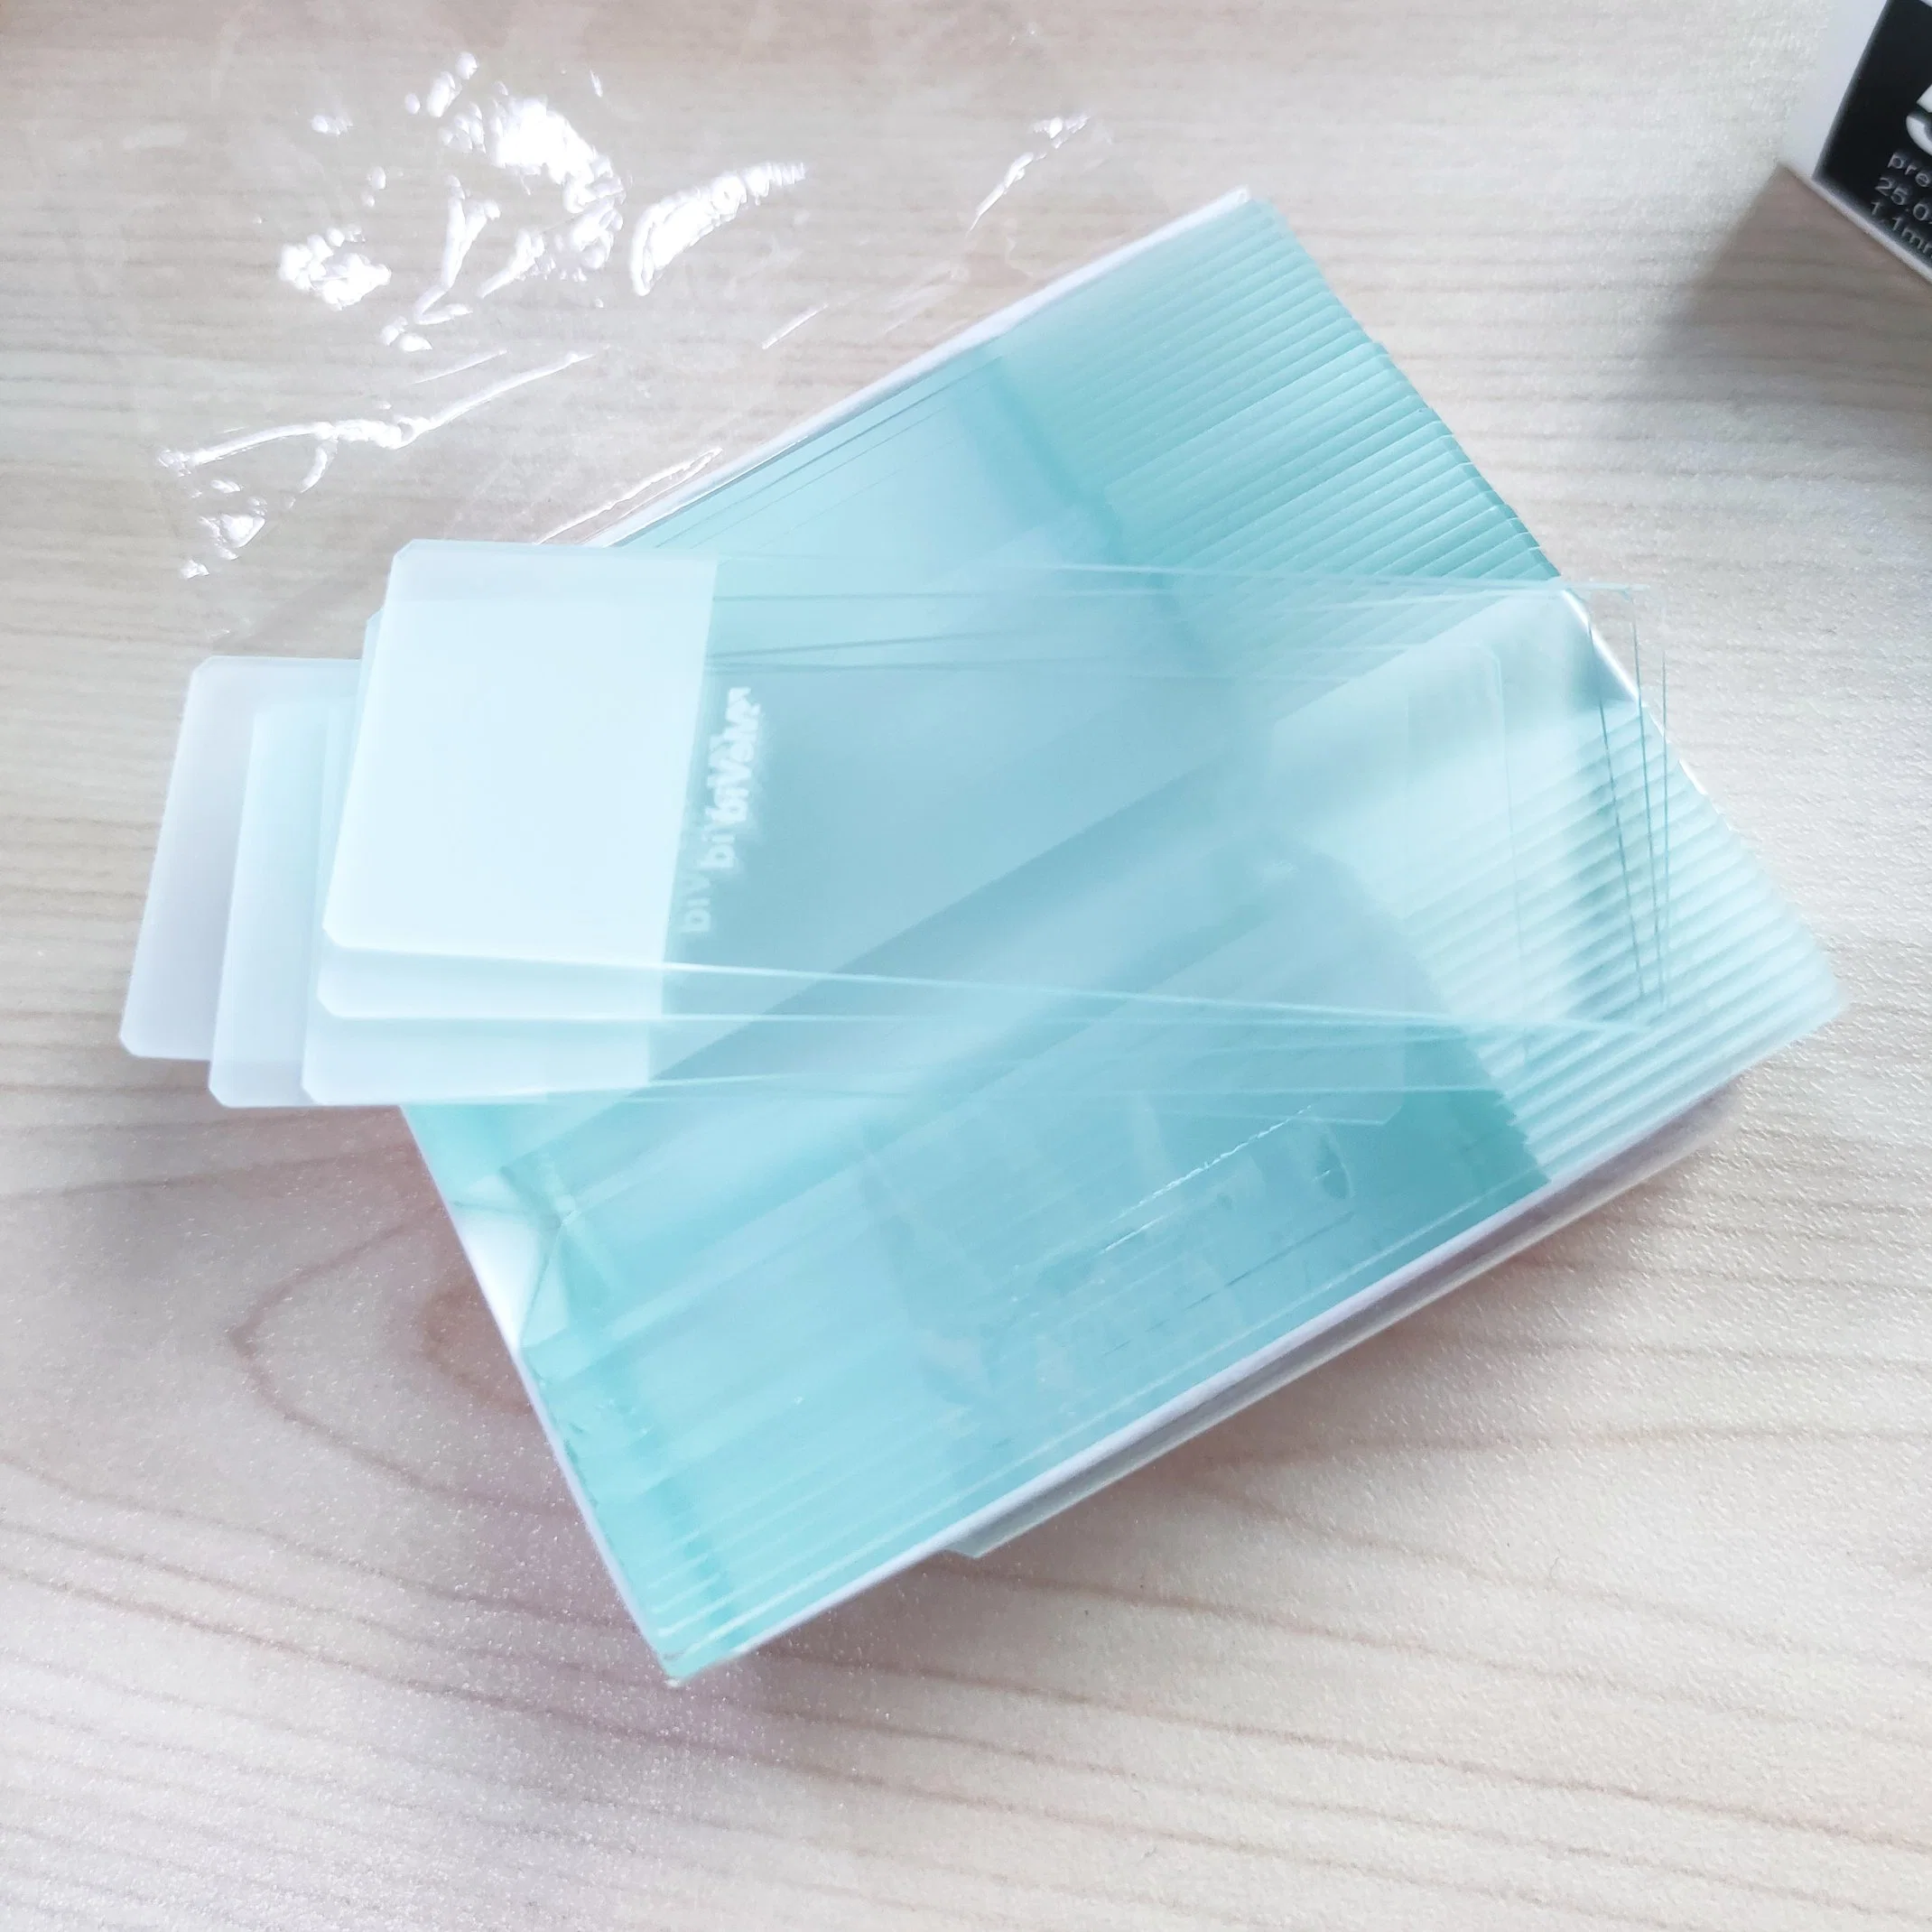 Top Sale Laboratory Glassware Single Frosted Microscope Slide